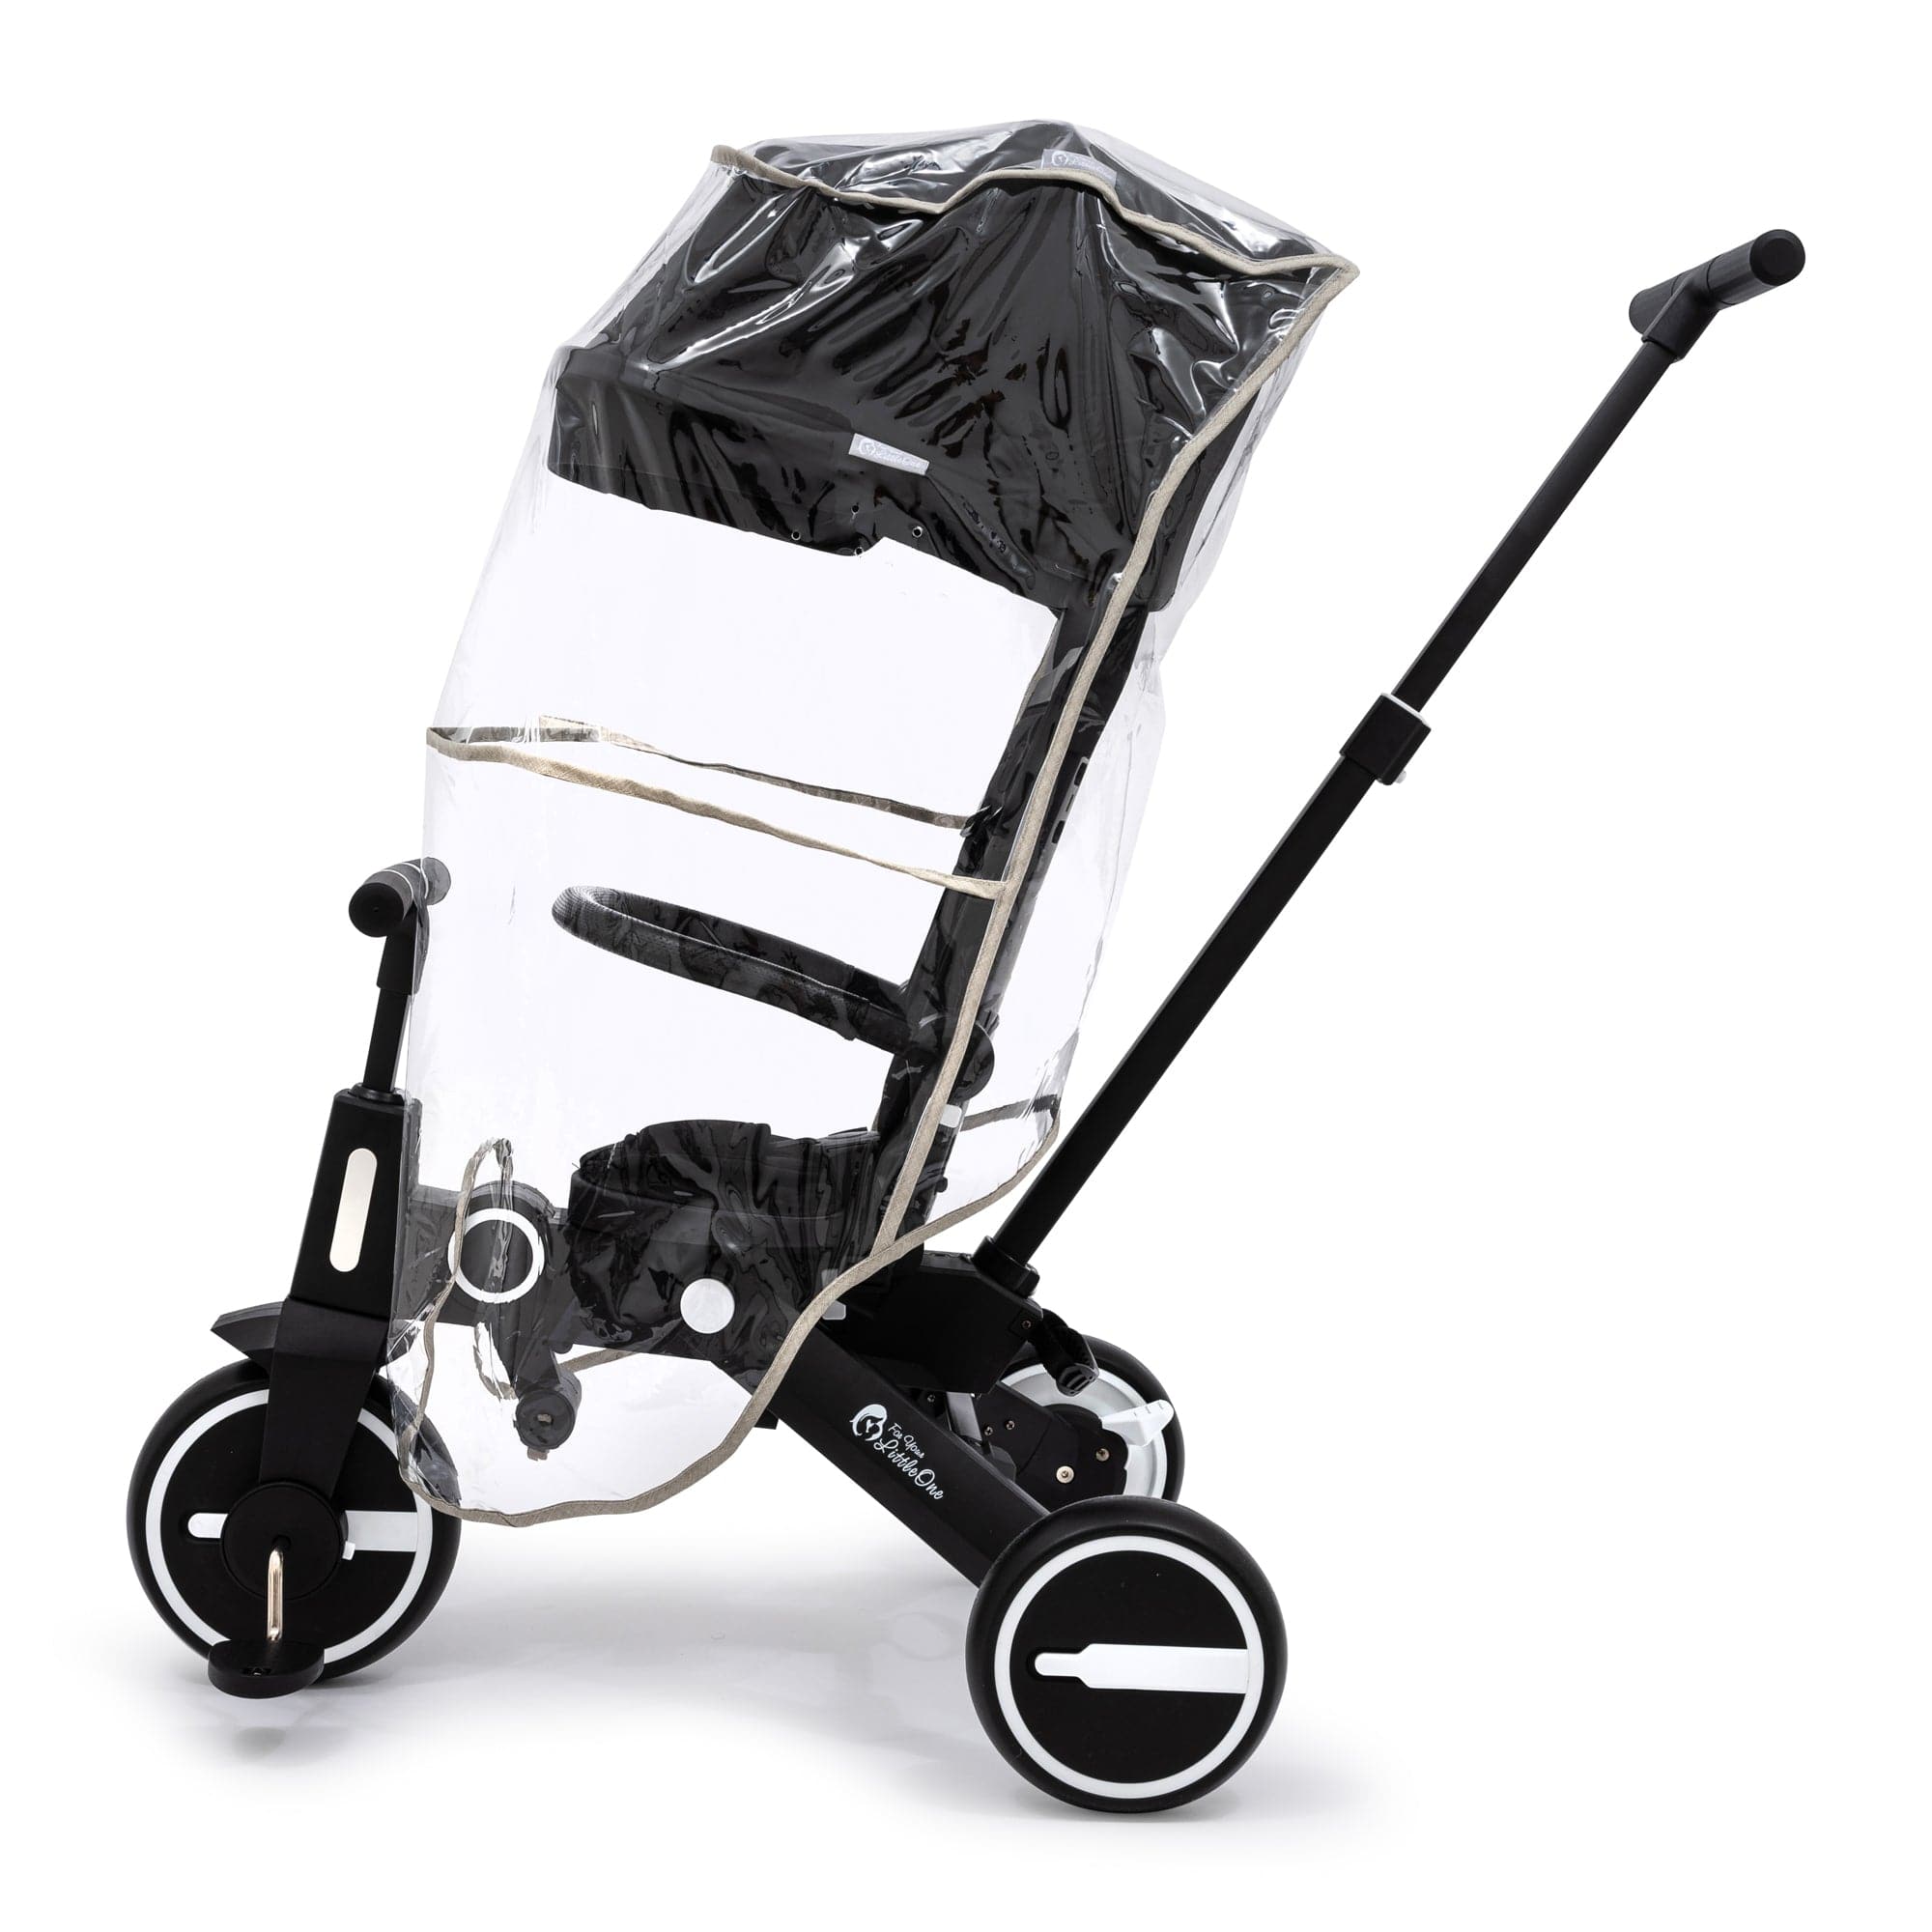 Foryourlittleone Xplor Plus Foldable Trike - Black & Gold - For Your Little One